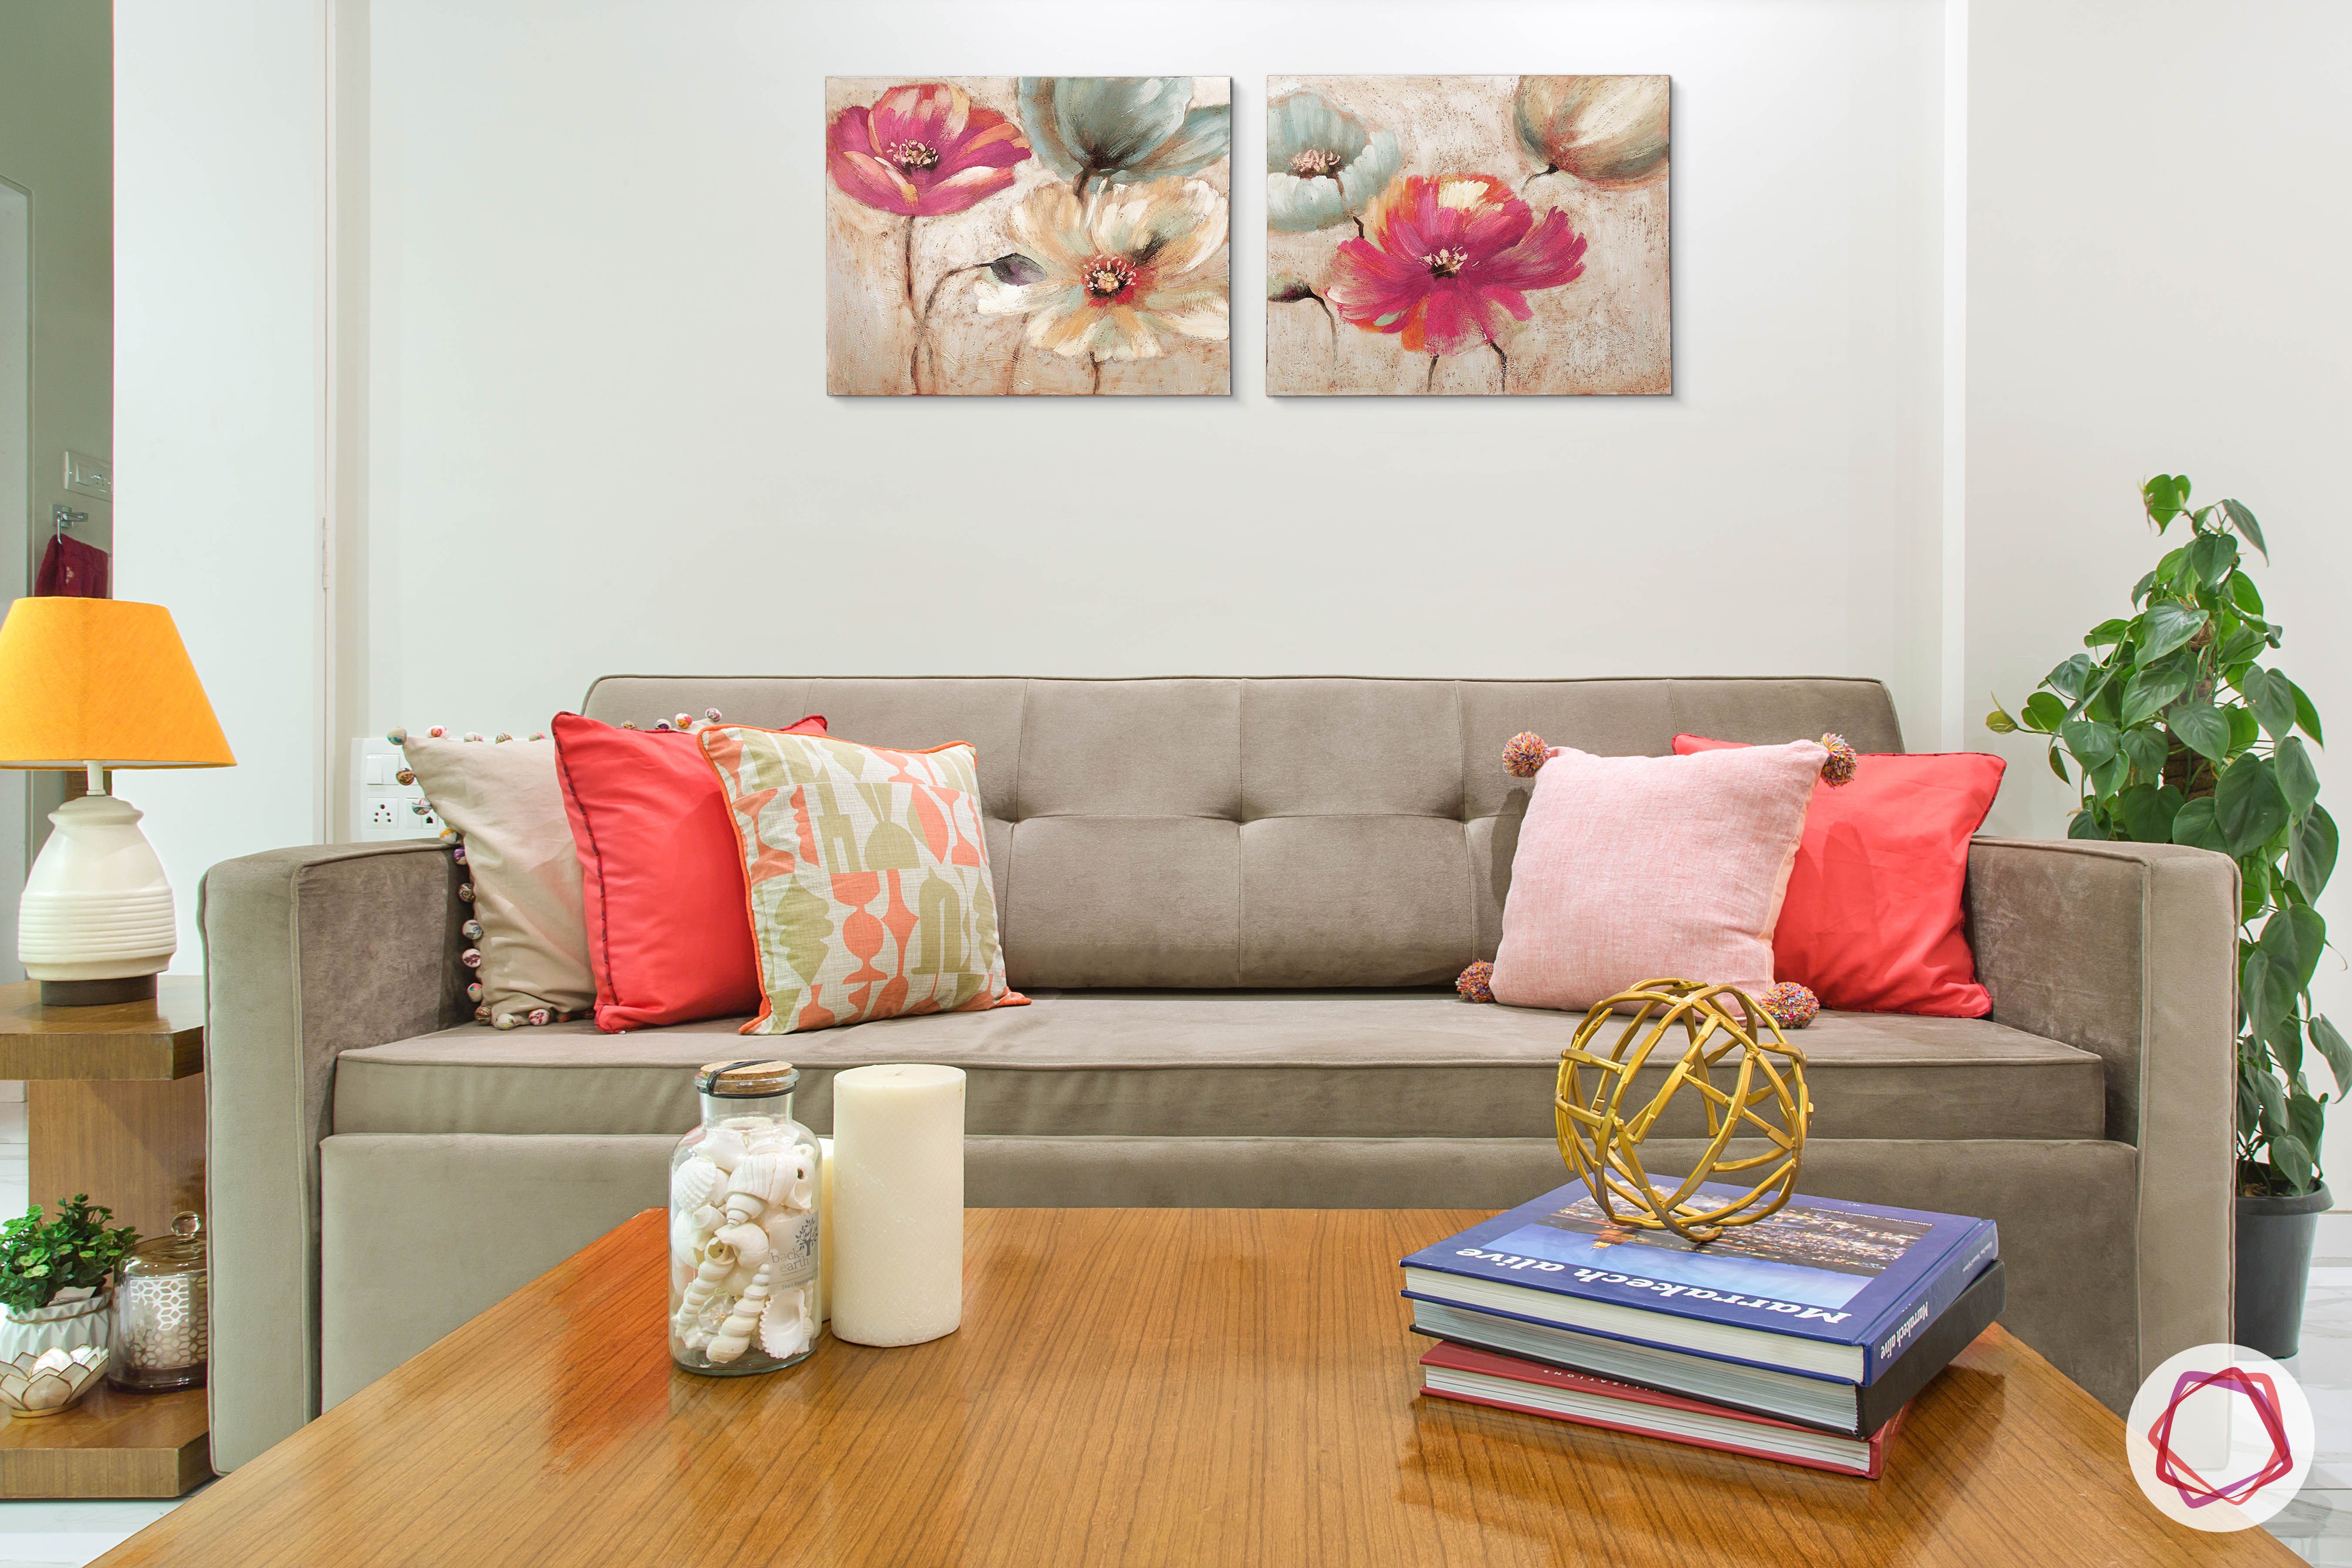 Alia bhatt-living room-interiors-grey sofa-wooden table-pink cushions